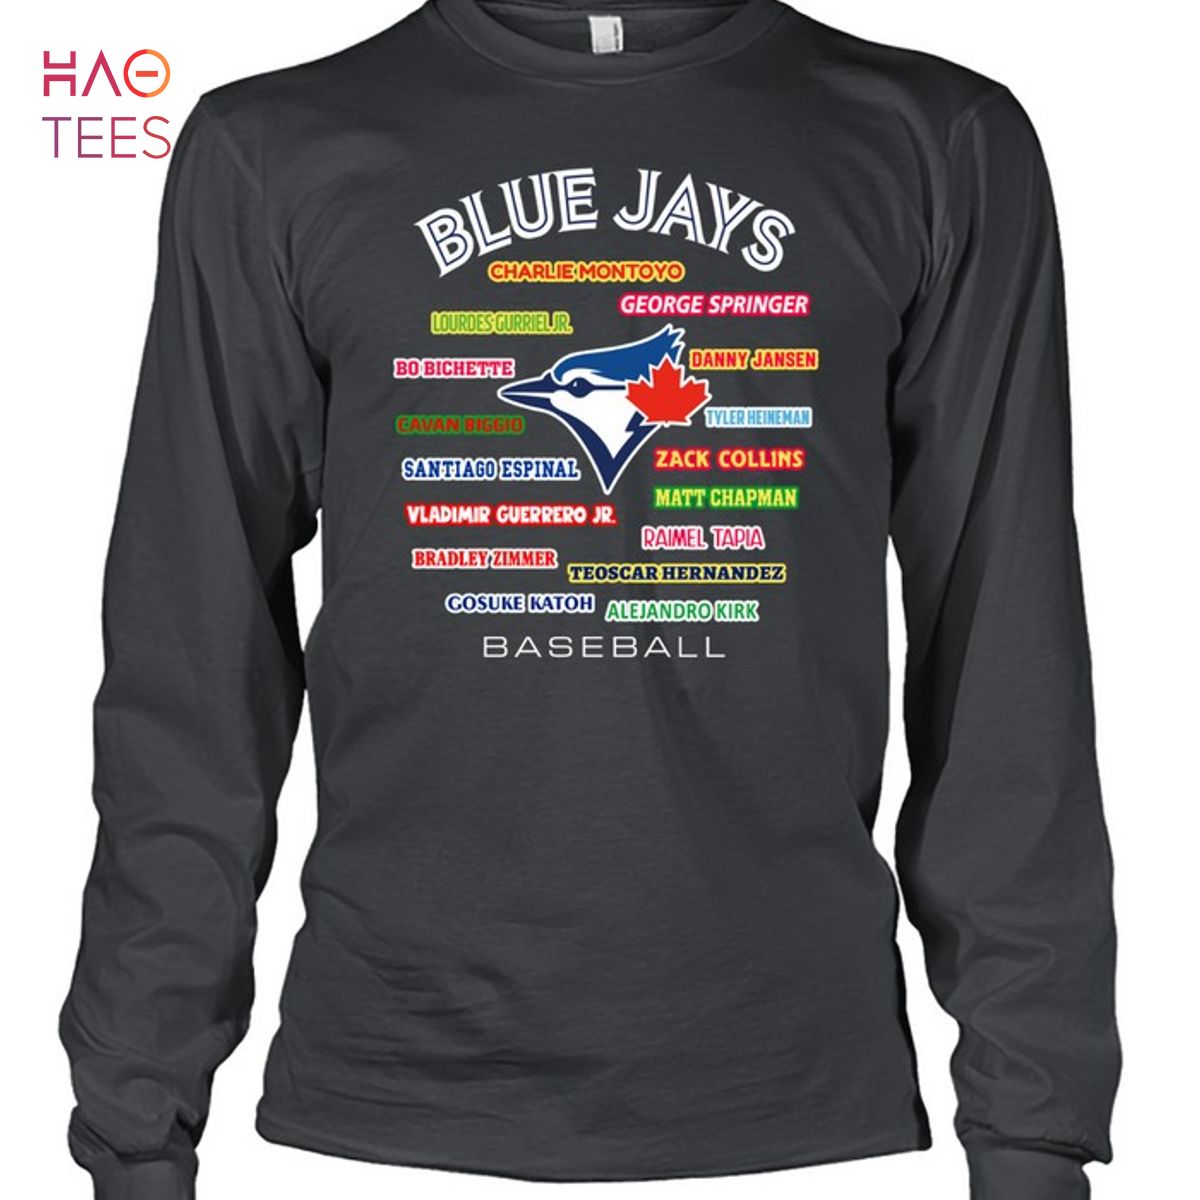 Cavan Biggio Number 8 Blue Jays Baseball Fan Gift T Shirt